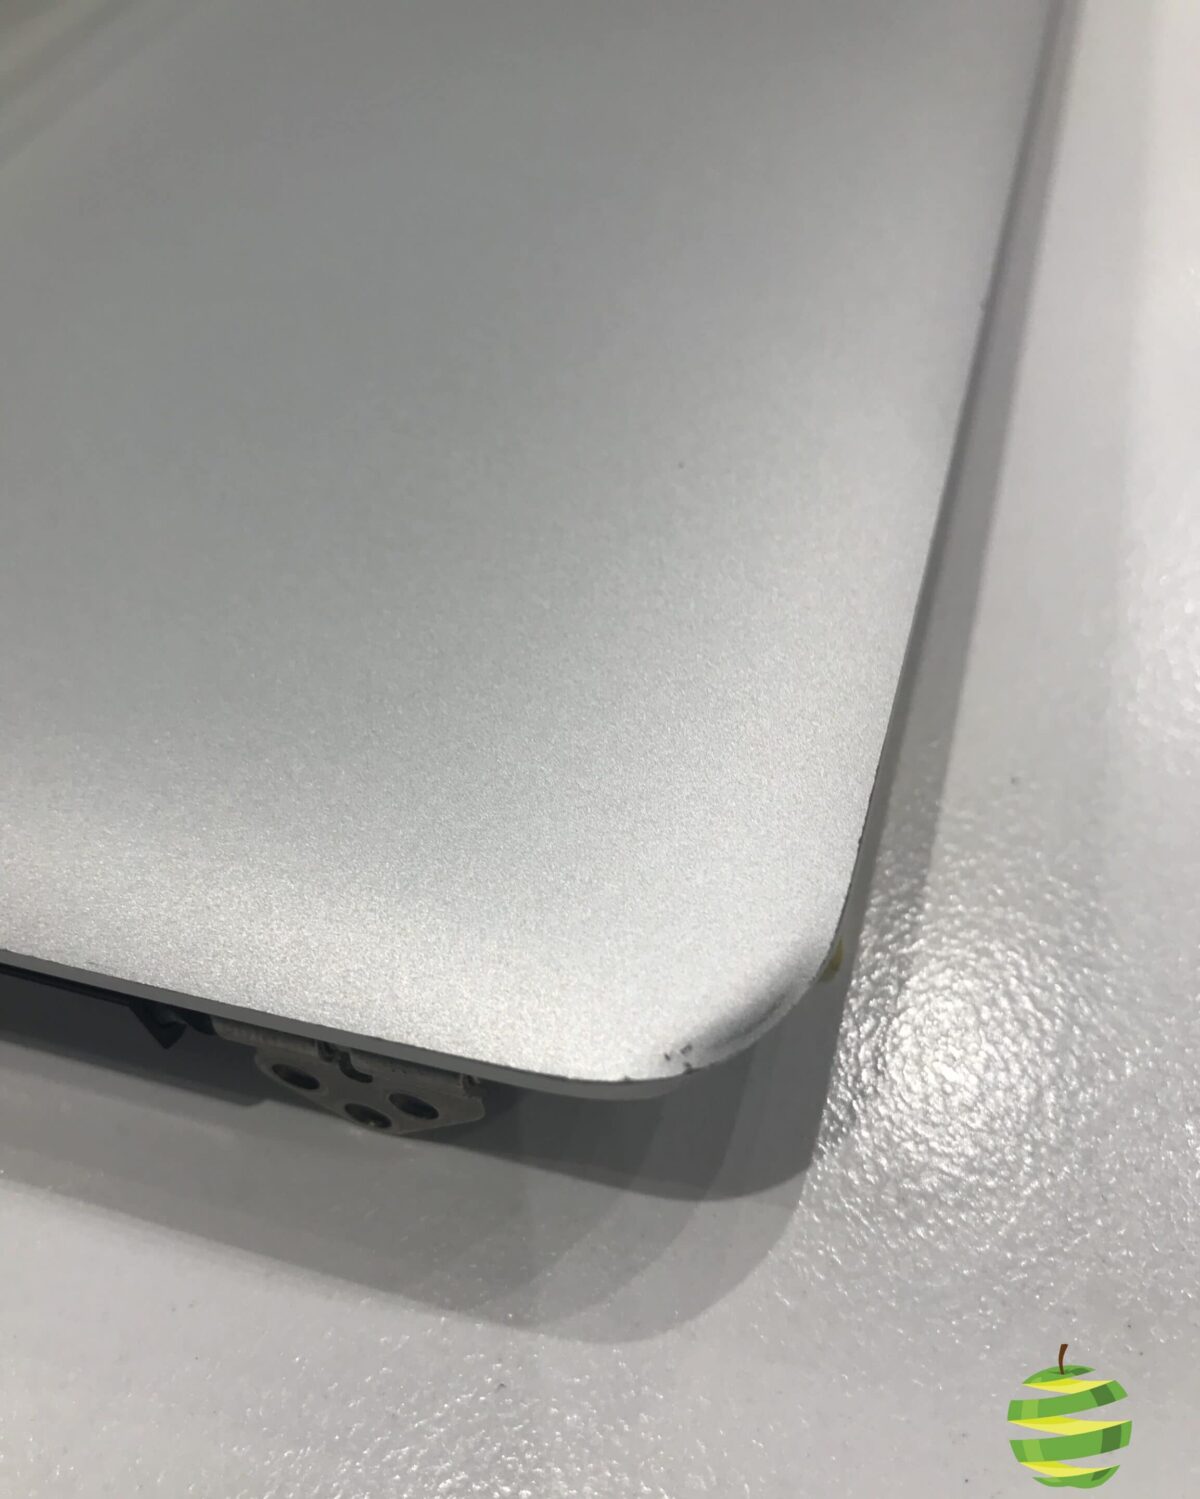 661-02532-REC-B Ecran LCD Complet Apple MacBook Pro 15 pouces Retina A1398 (2015) Reconditionne grade B